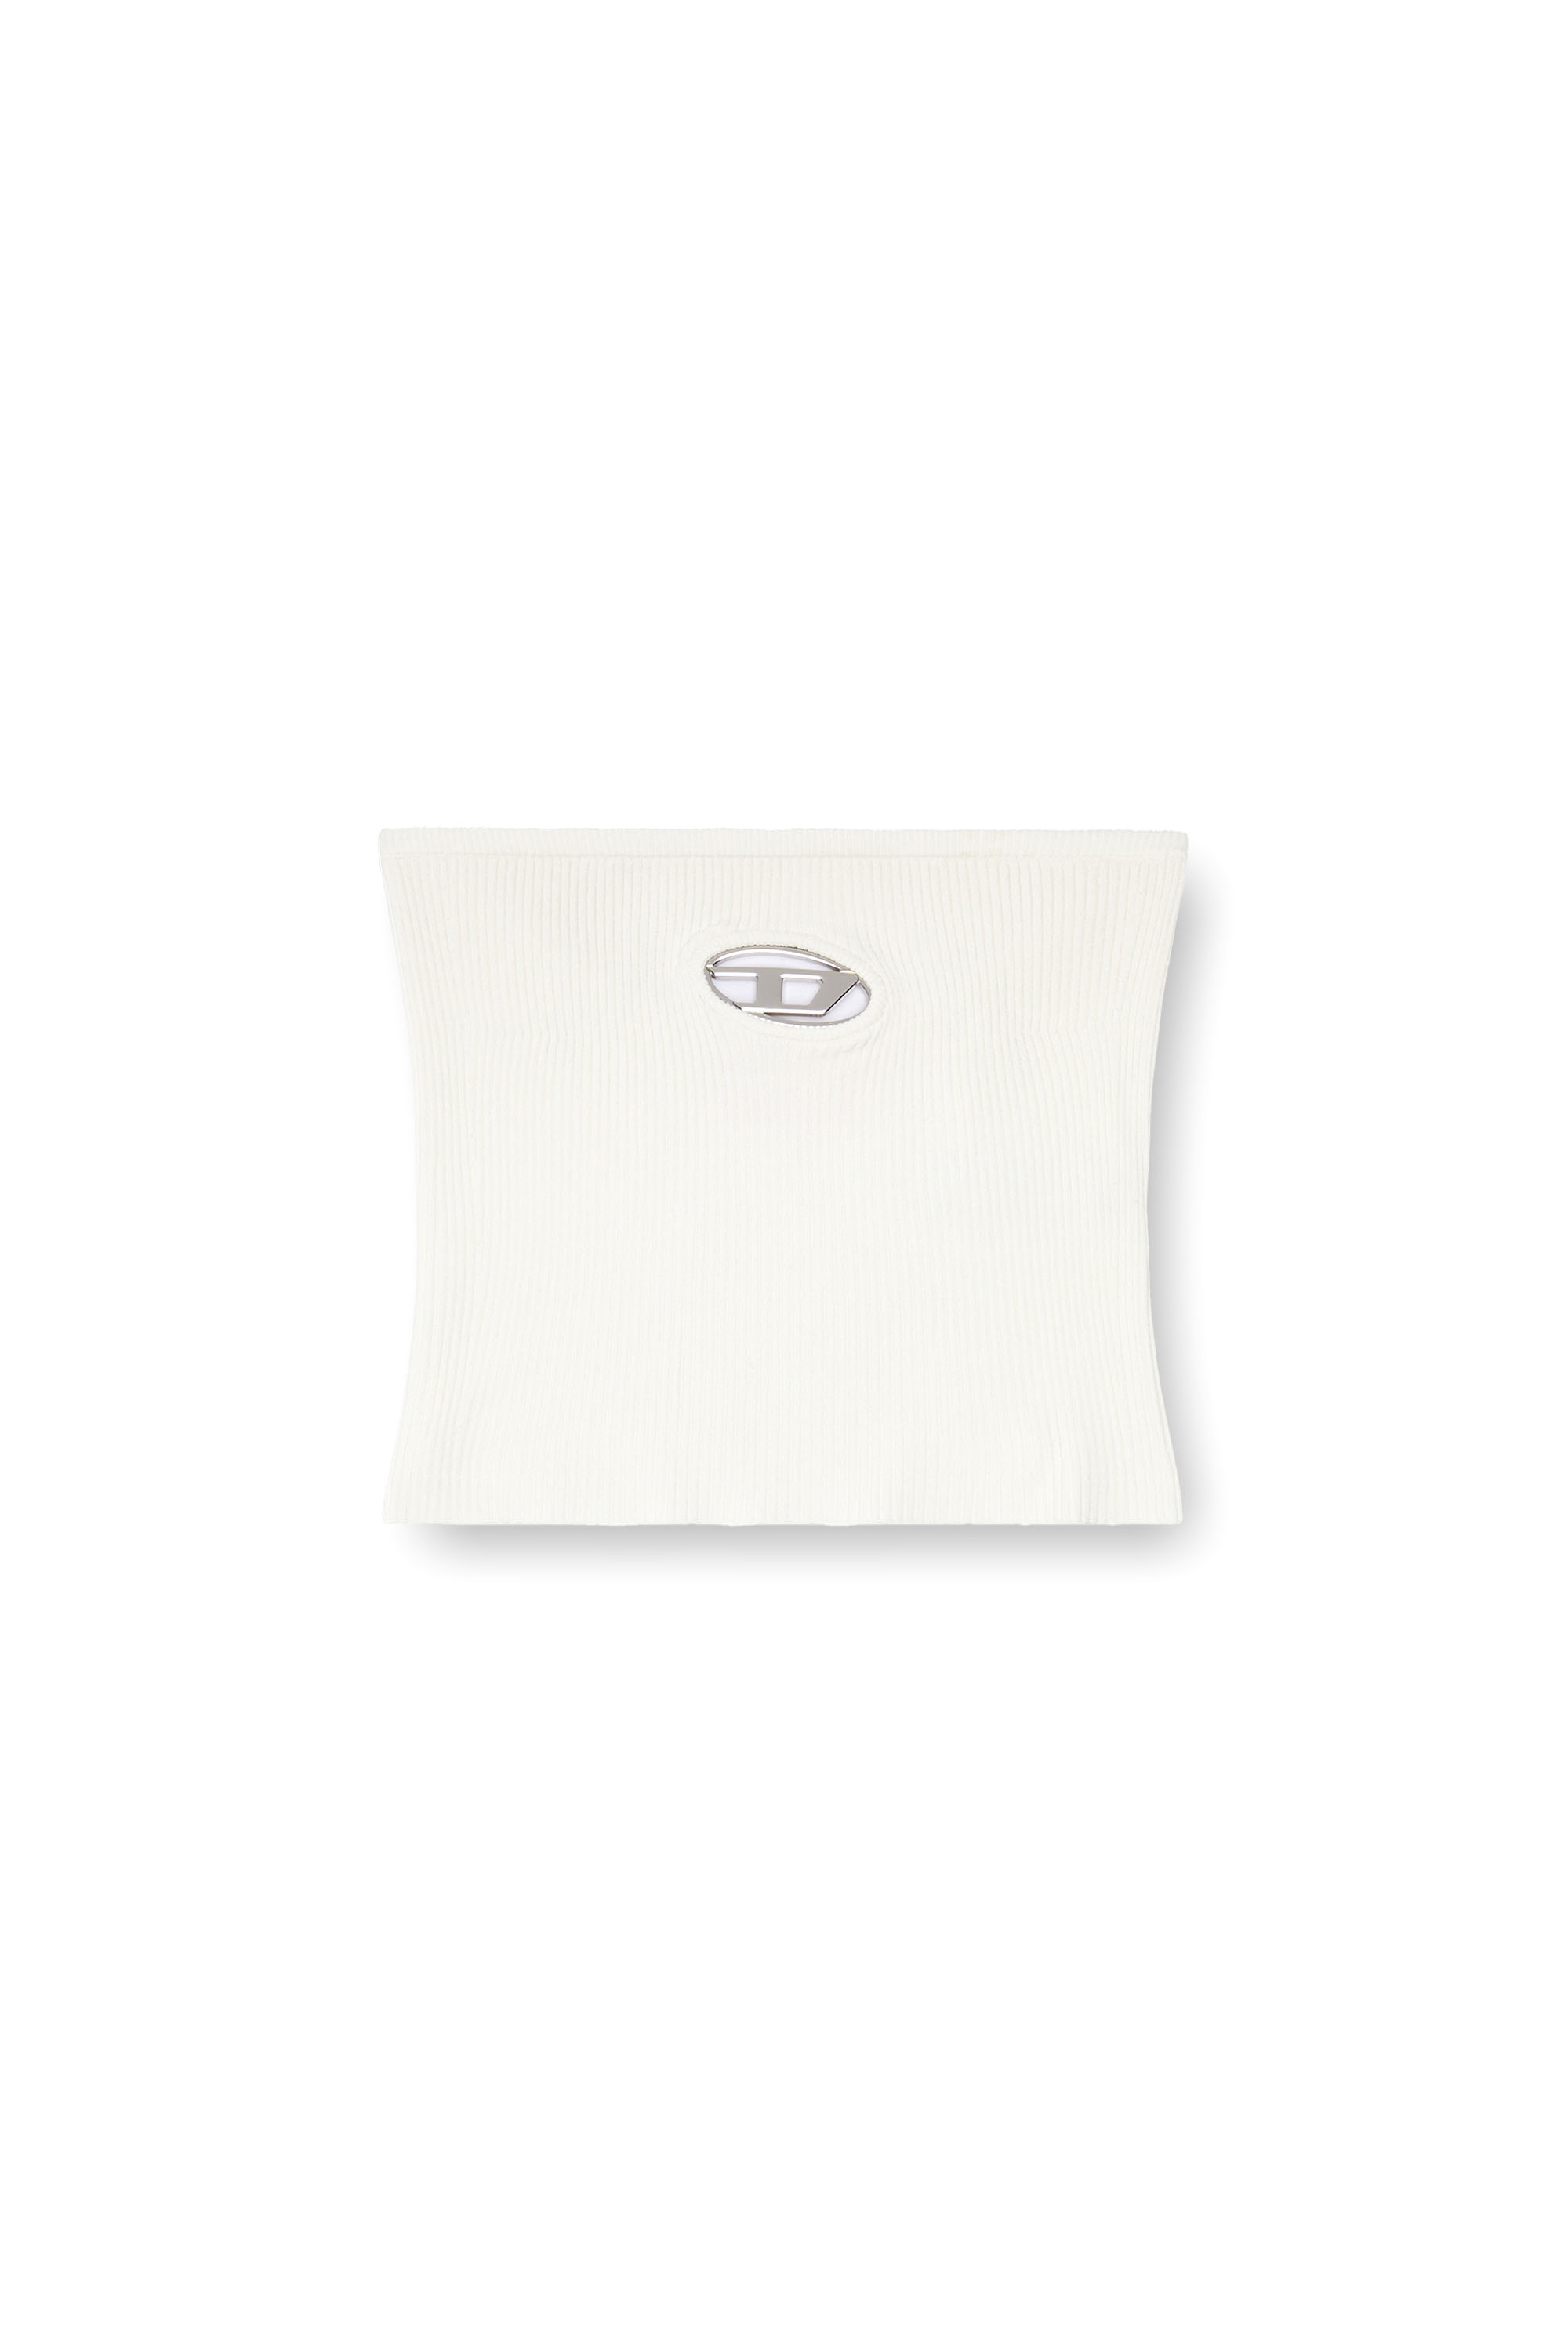 Diesel - M-CLARKSVILLEX, Donna Top a fascia con logo in metallo in Bianco - Image 5